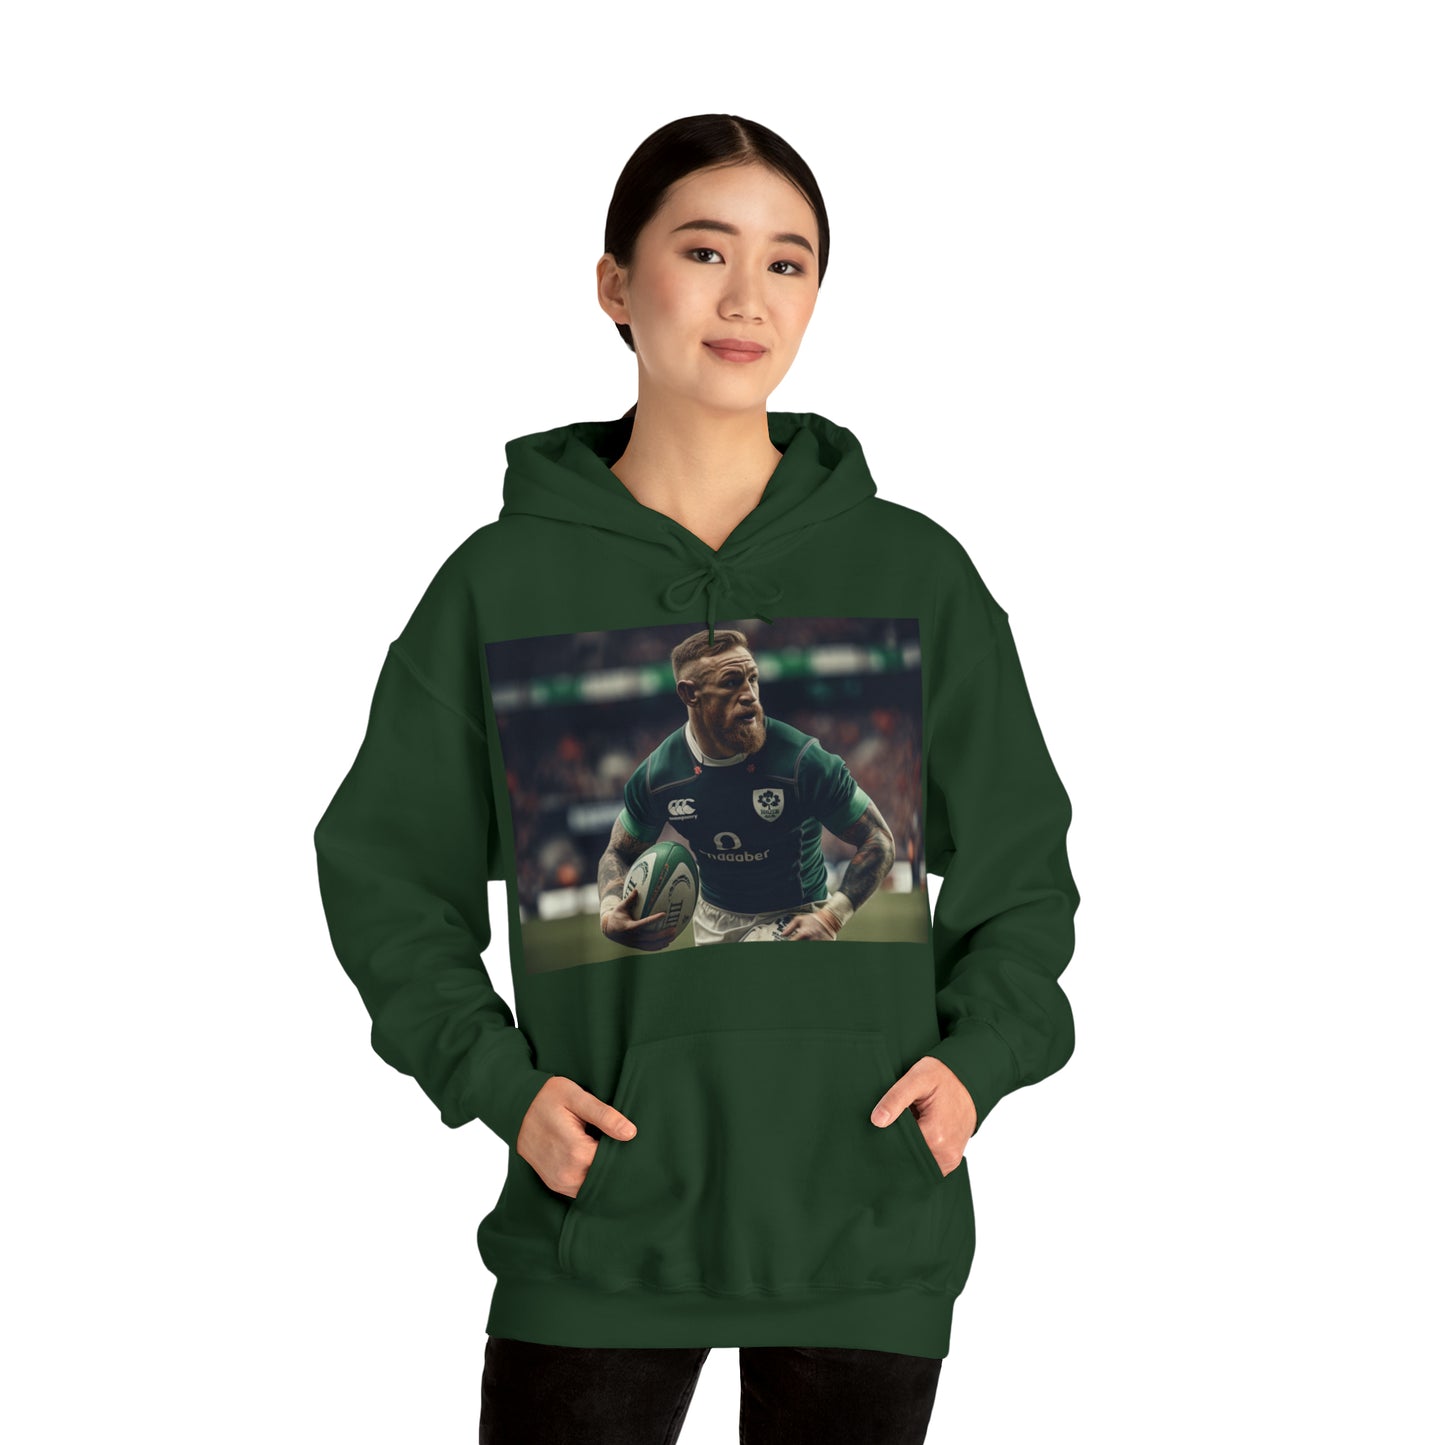 Conor Rugby - dark hoodies